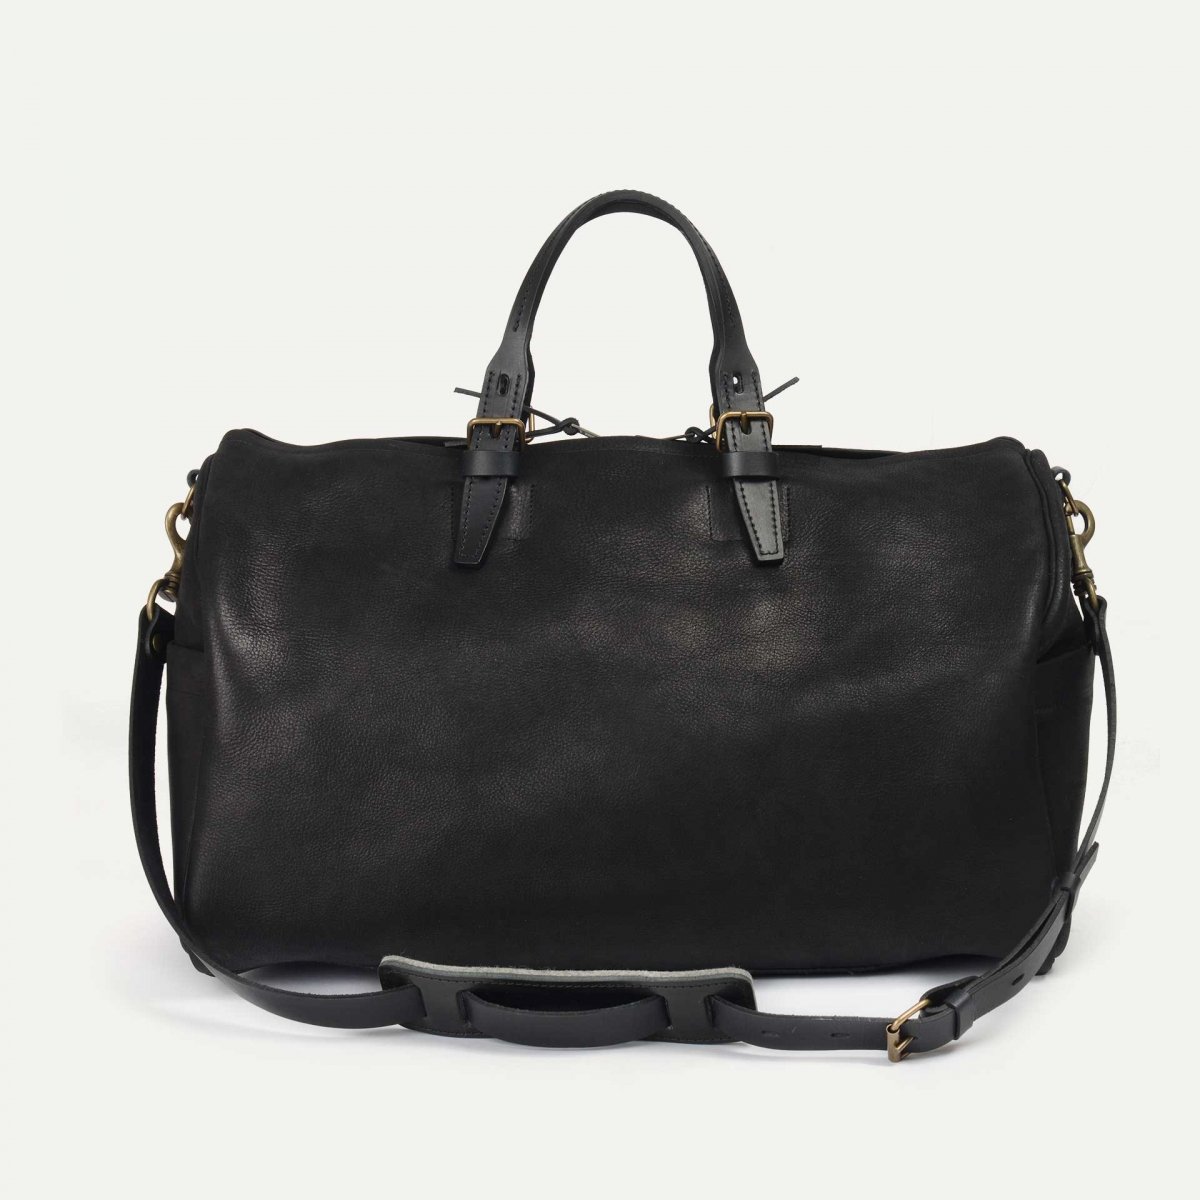 Hobo Travel bag - Charcoal black / Waxed Leather (image n°3)